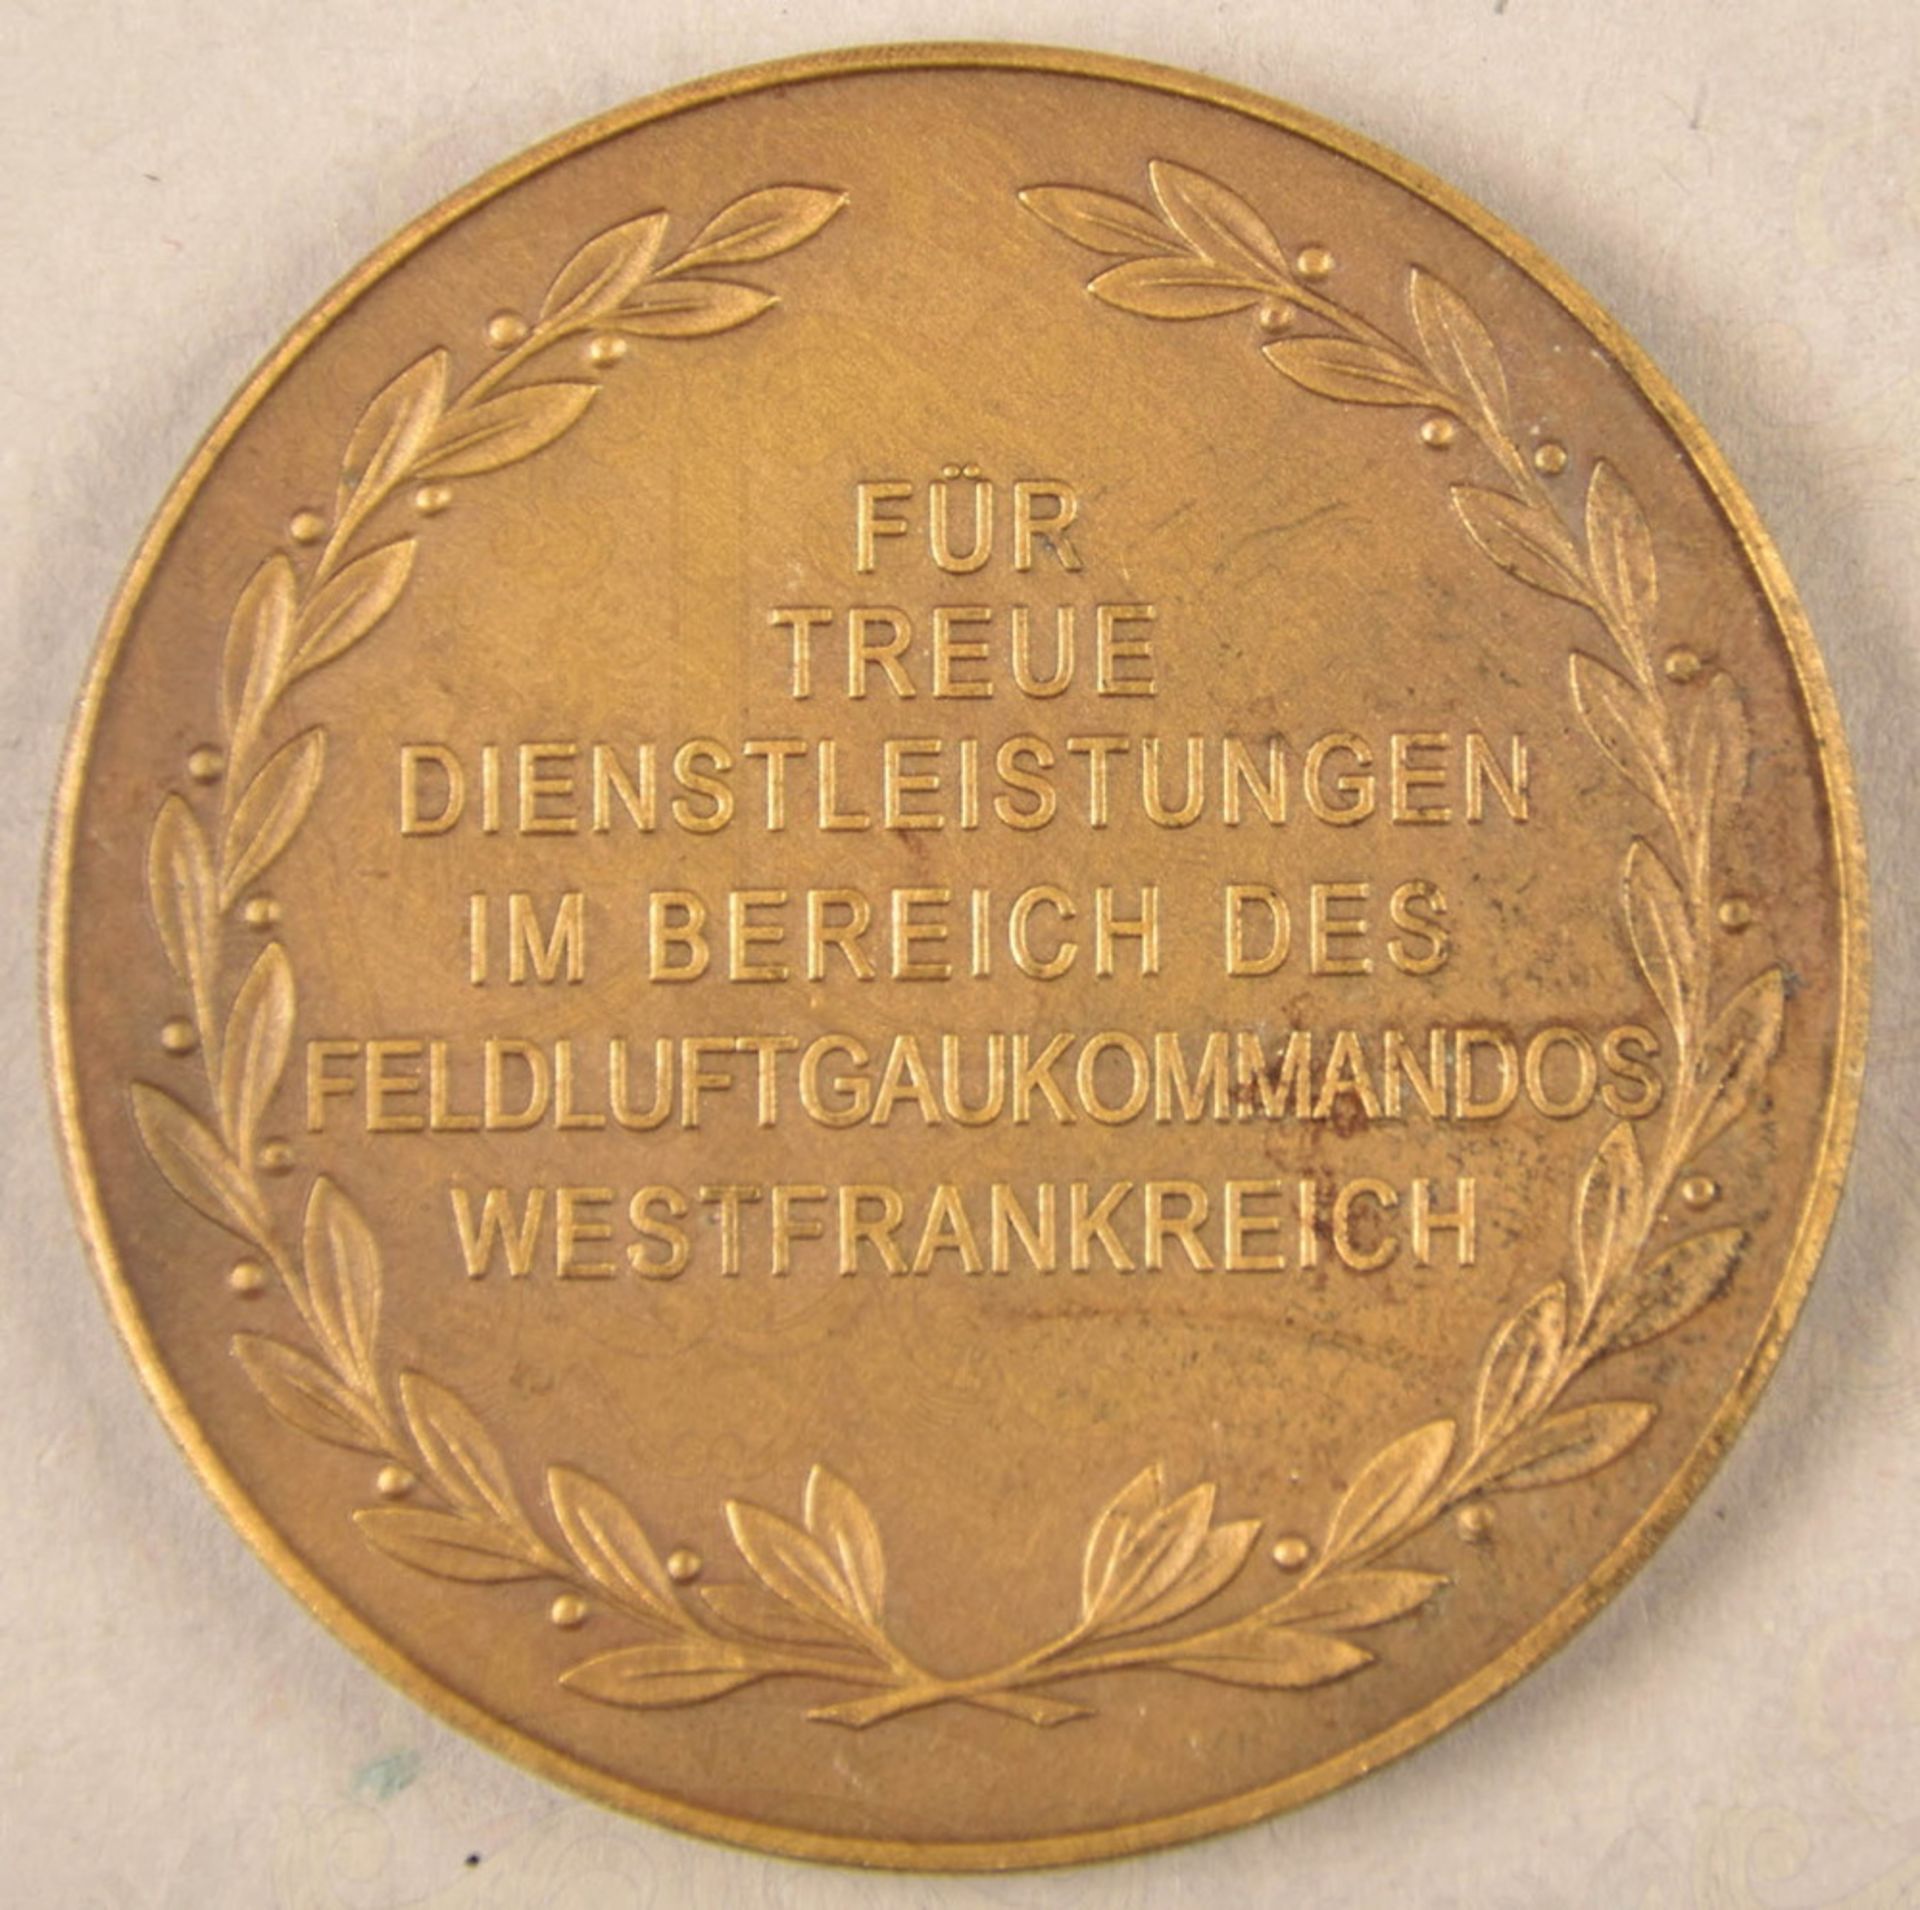 Luftwaffe medal for faithful service 1944 - Image 3 of 3